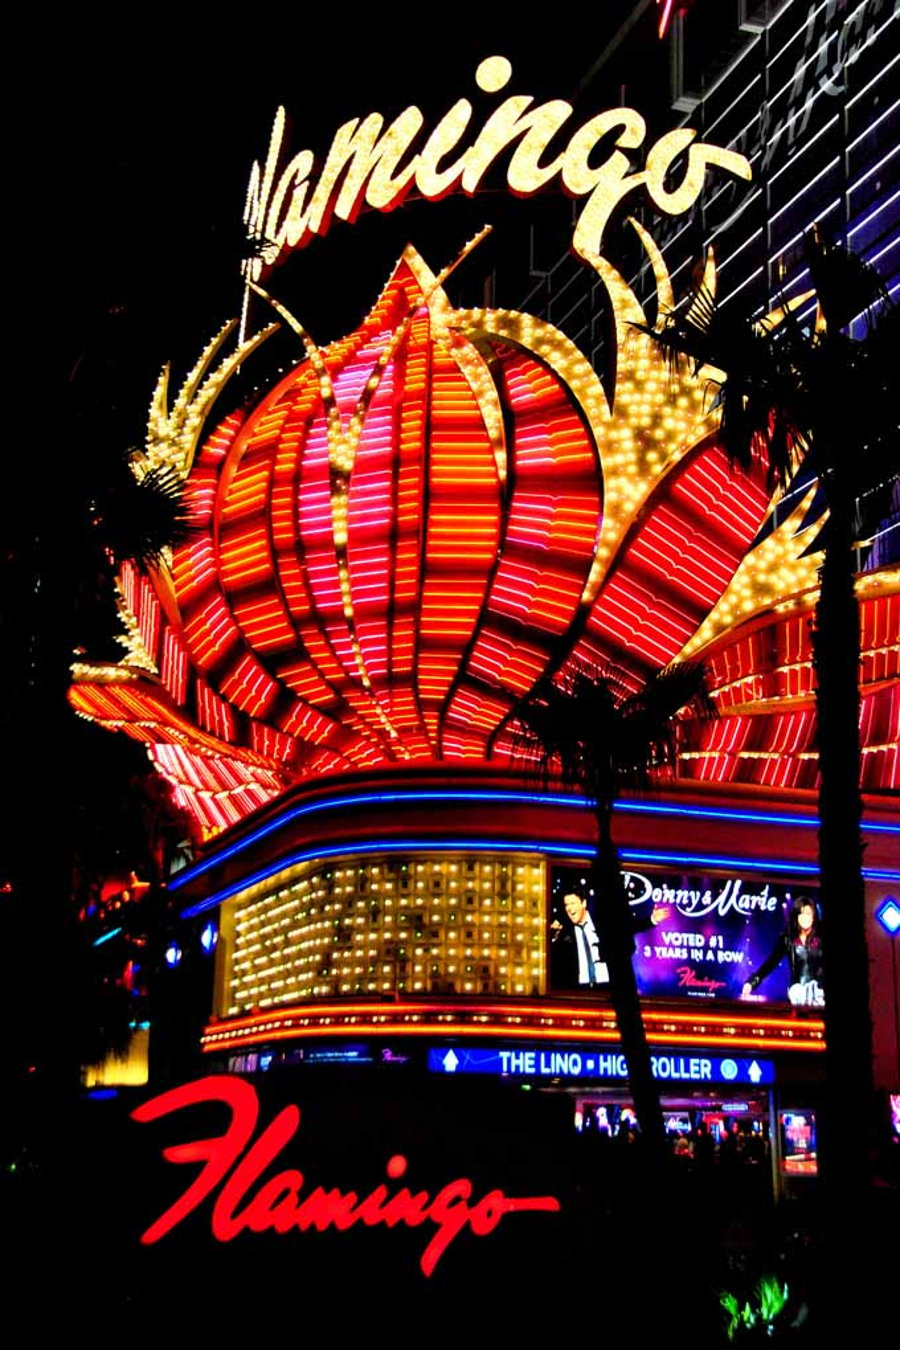 Flamingo Hotel Las Vegas United States of America 12"x18" Print